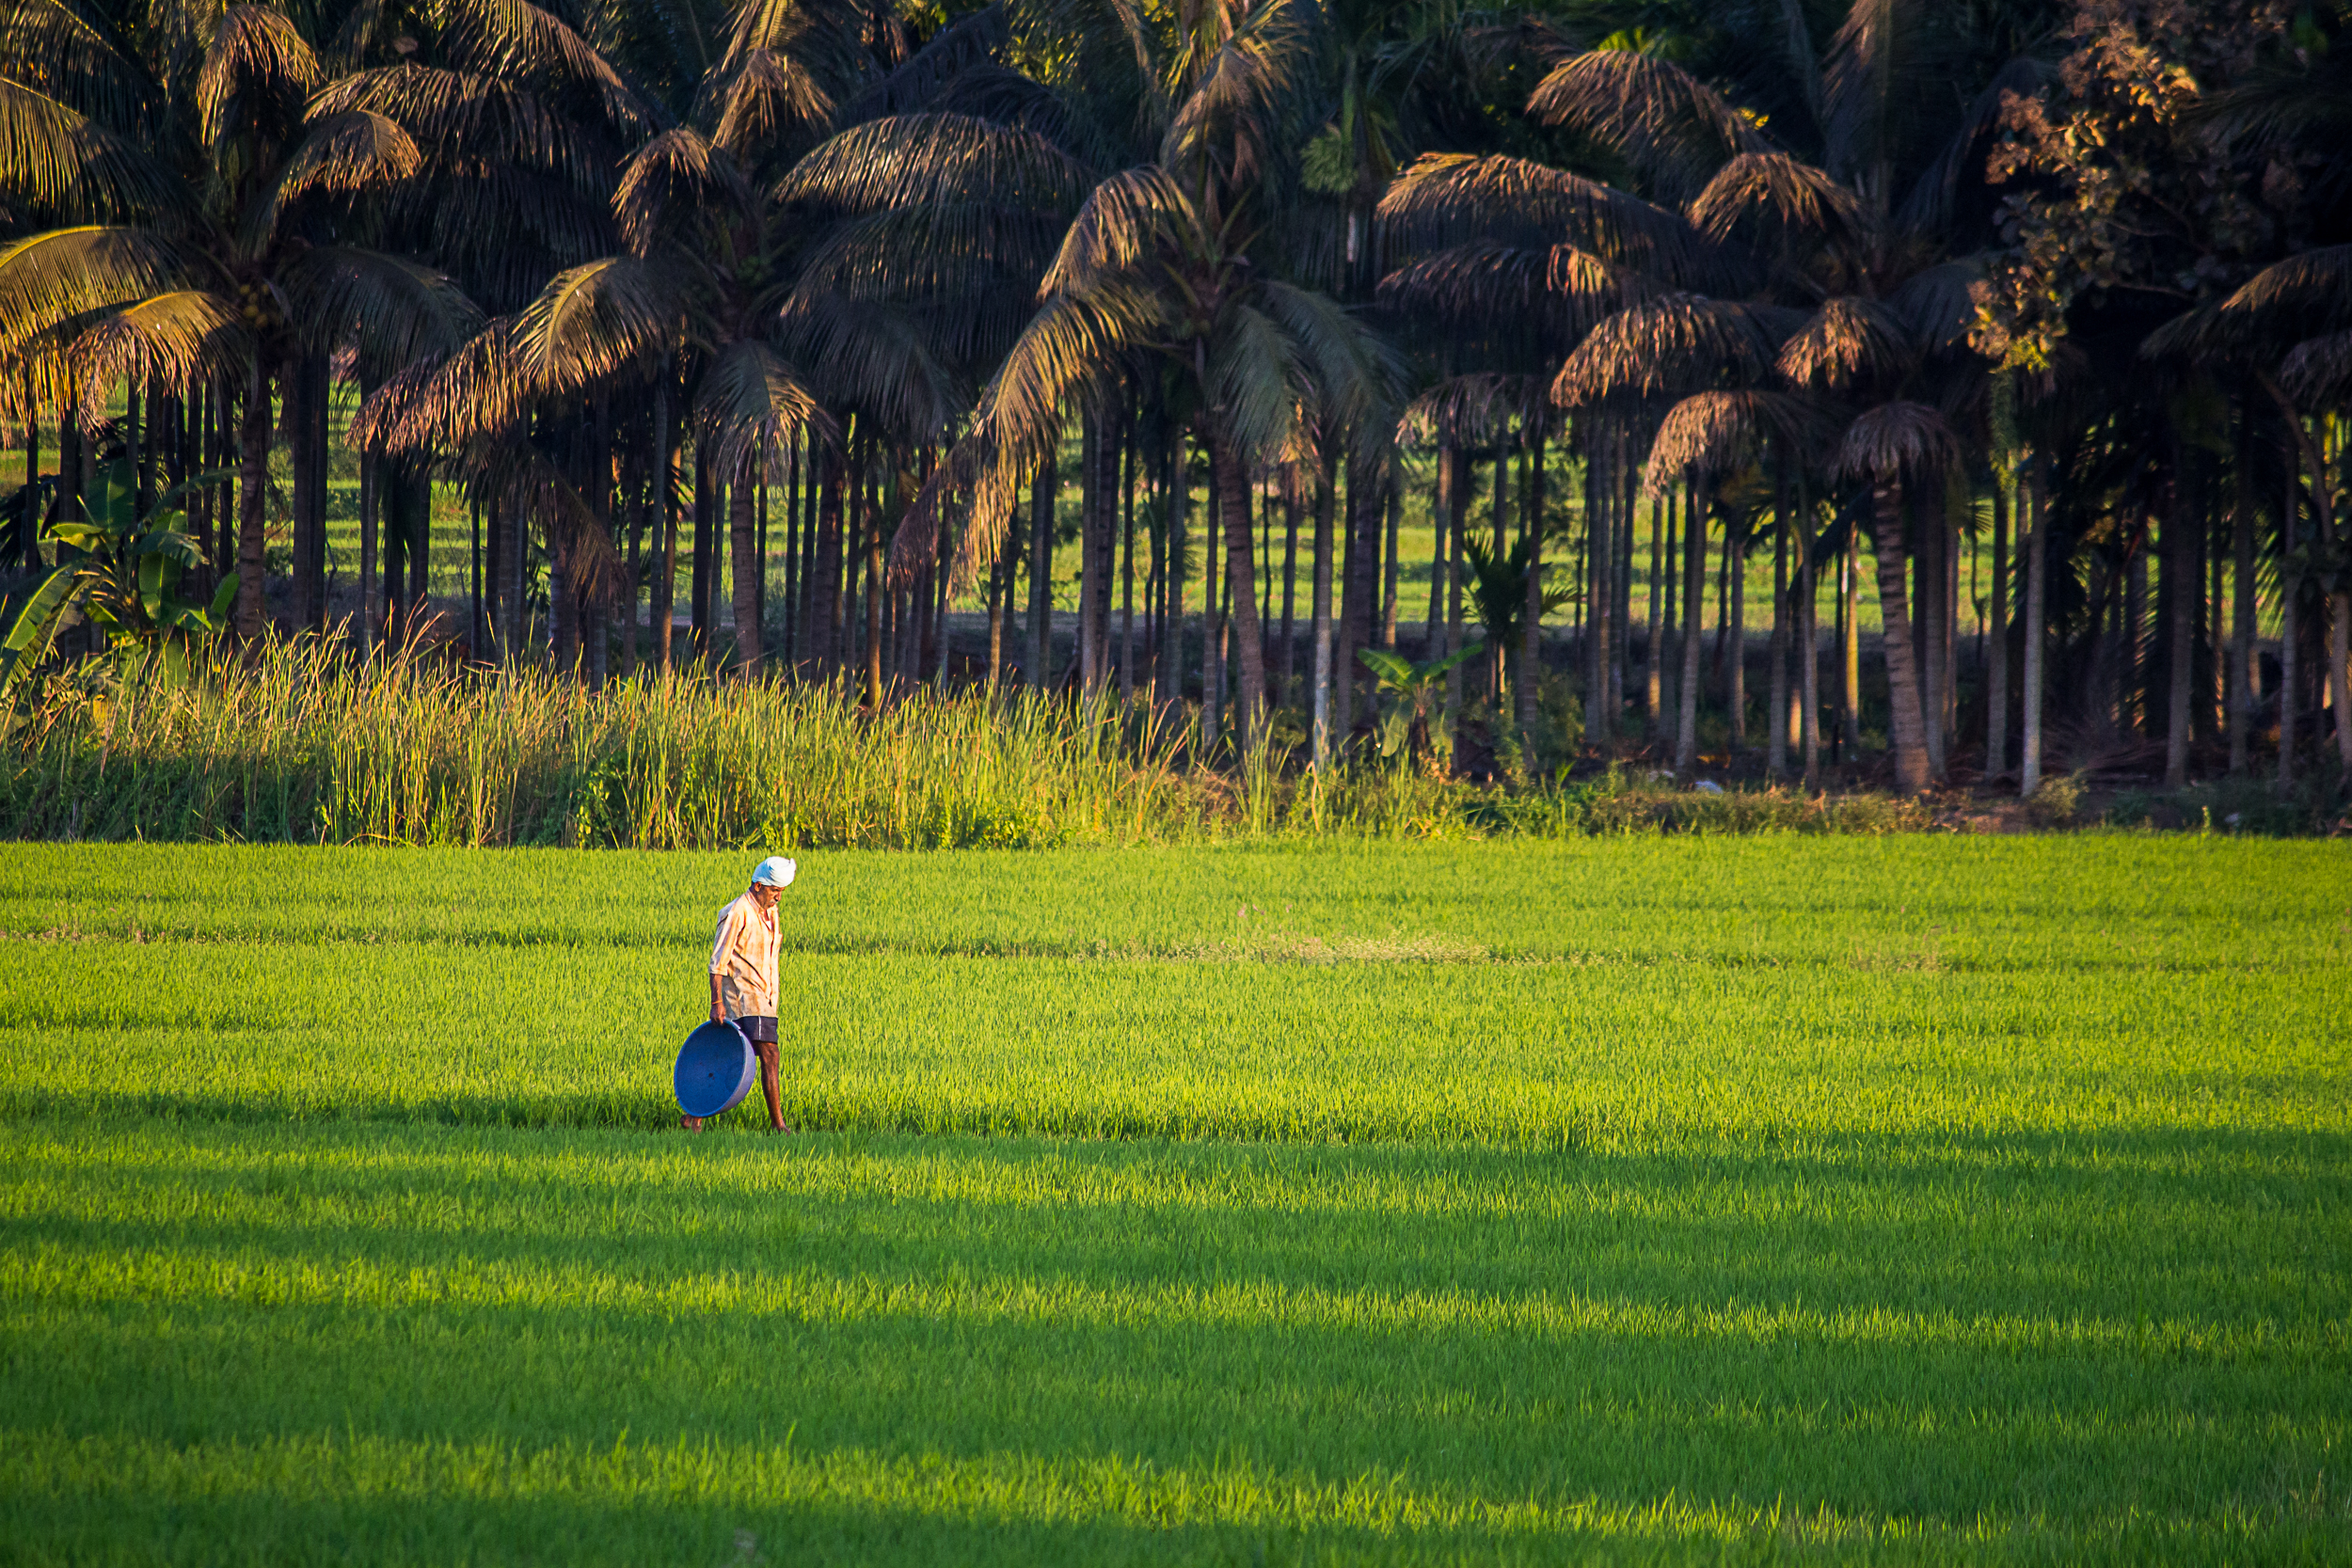 A farmer in a paddy field